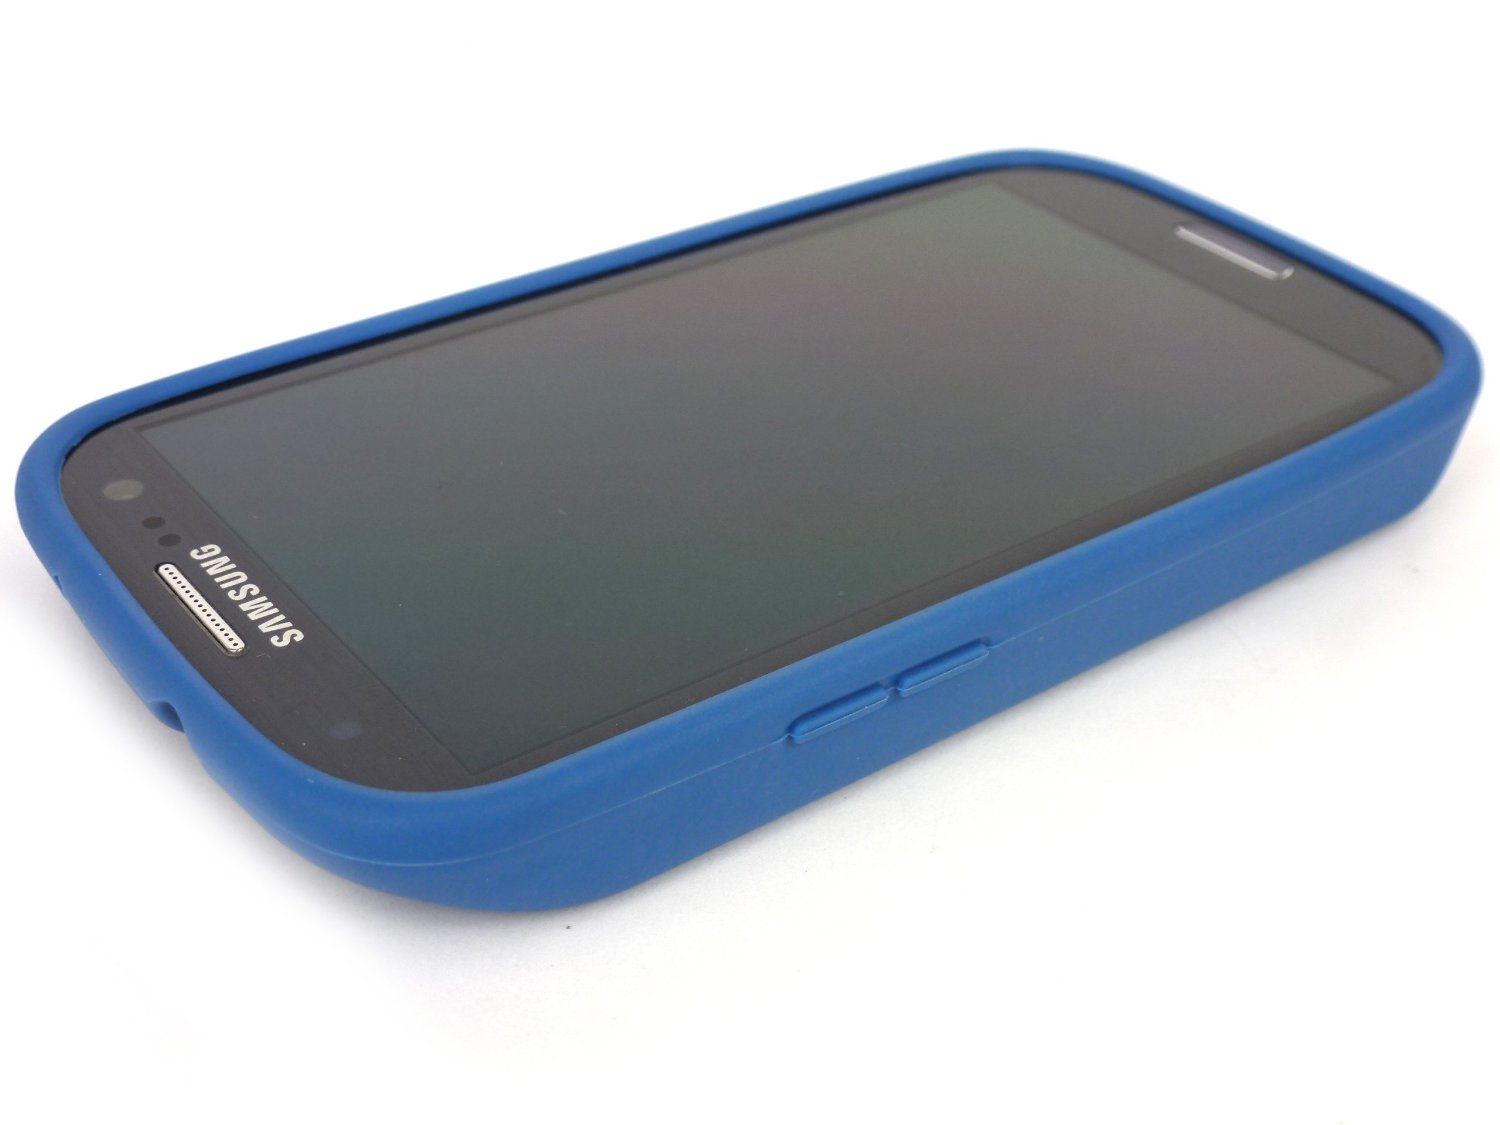 71 | Miscellaneous | <!--:TH--></noscript>!!!แบตเตอรี่ขนาด 7000 mAh ของ Samsung Galaxy S3 ราคาน่าสอย 34$ (980บาท) อึดกันข้ามวันข้ามคืน